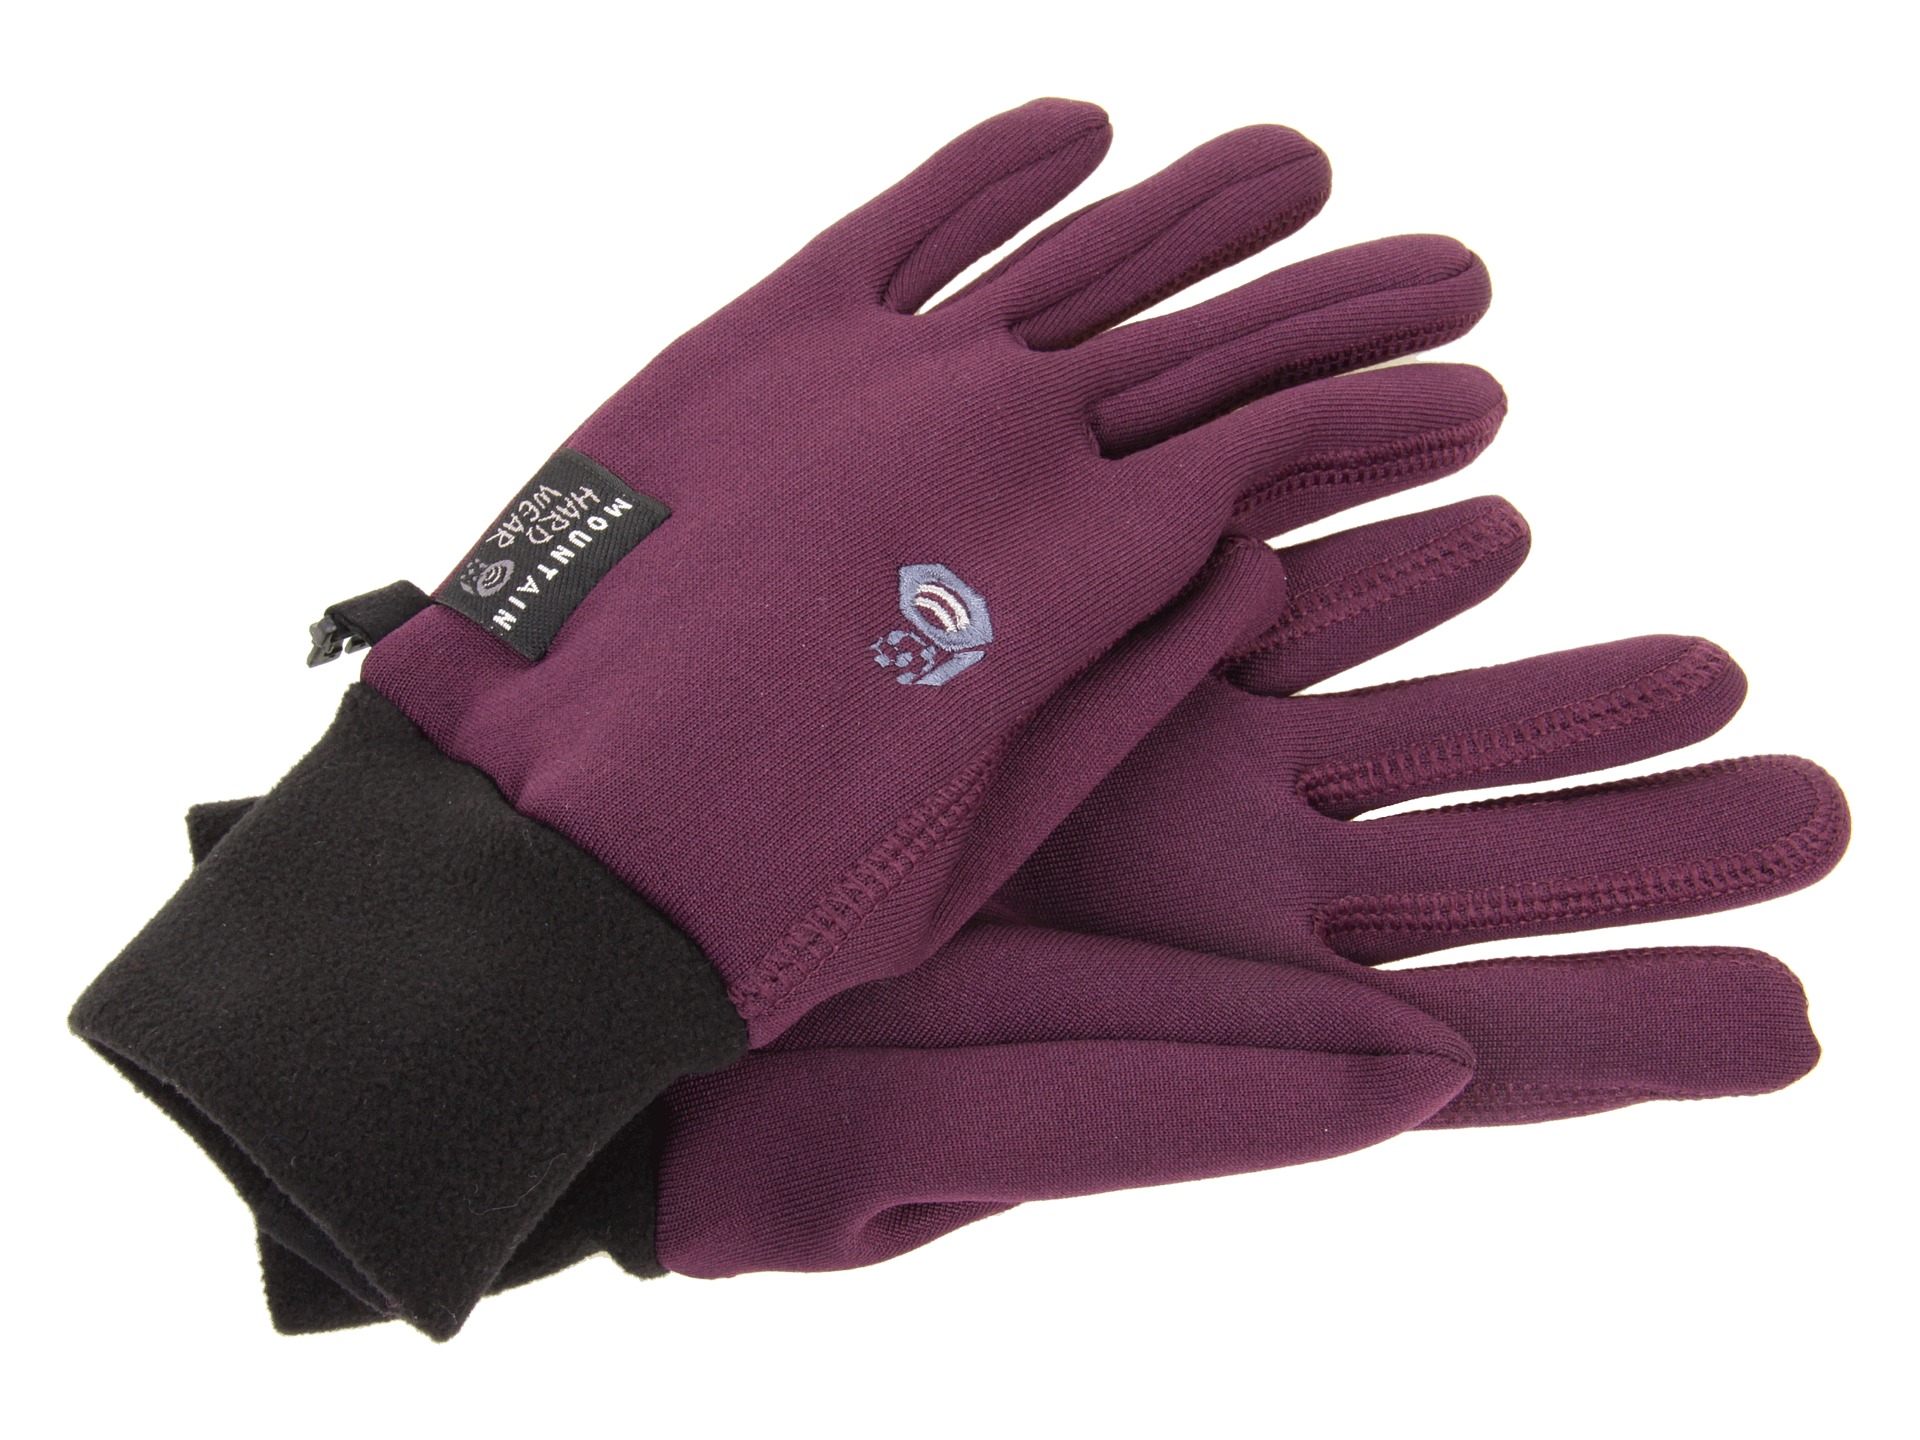 Mountain Hardwear Womens Power Stretch Glove $32.00 